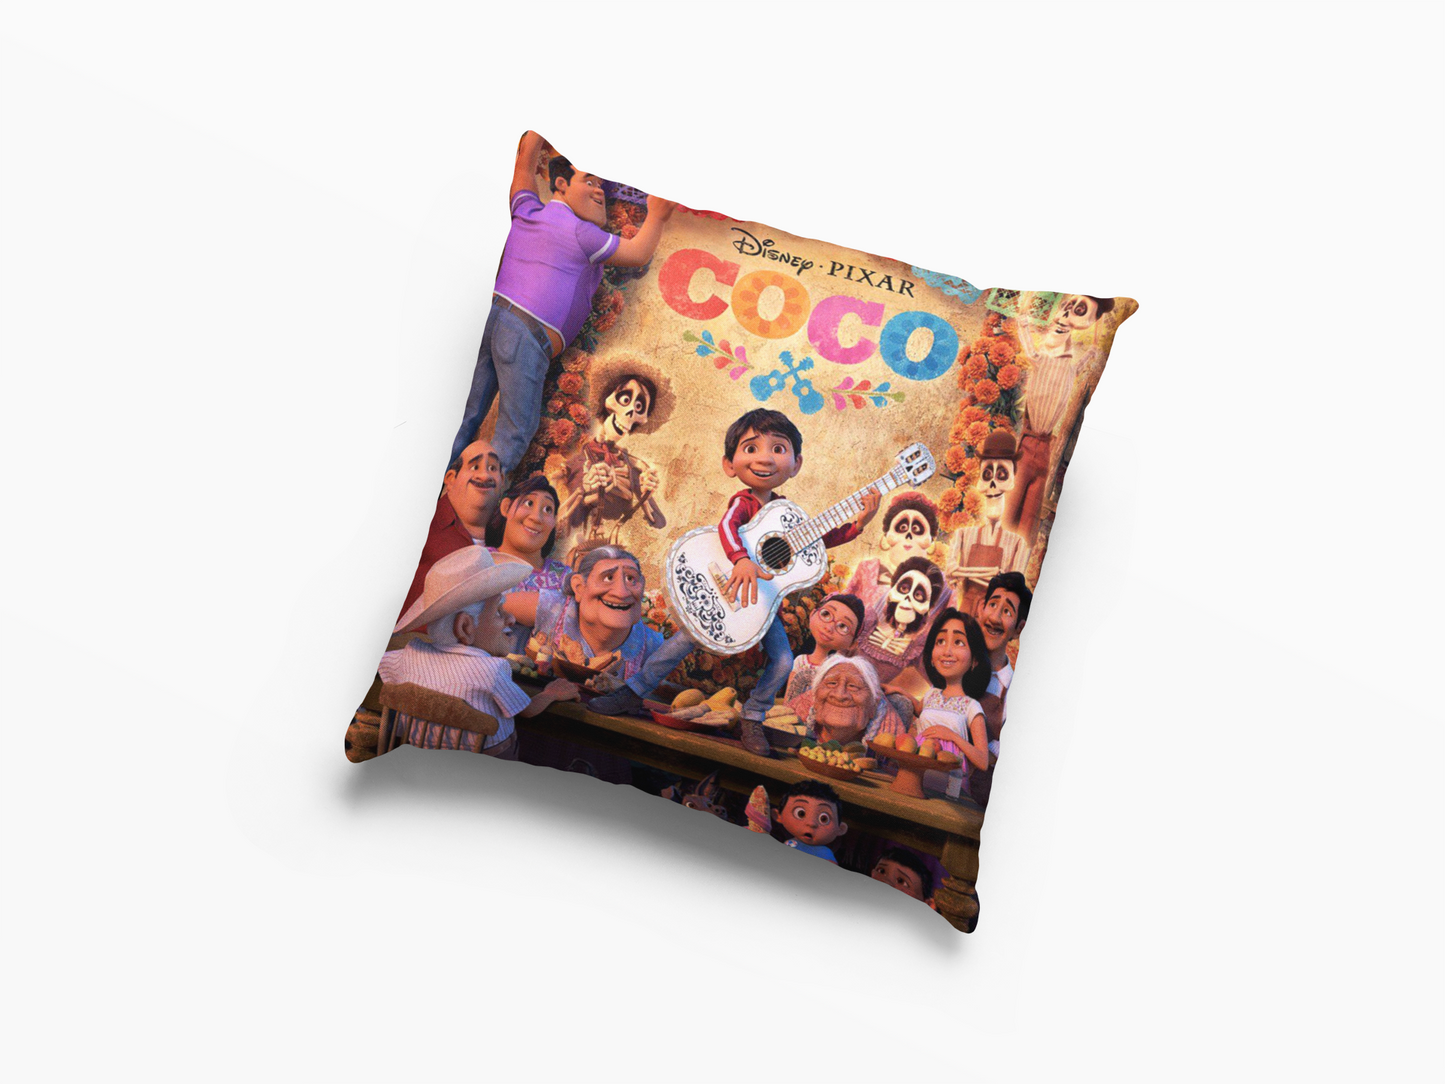 Disney Pixar Coco Poster Cushion Case / Pillow Case